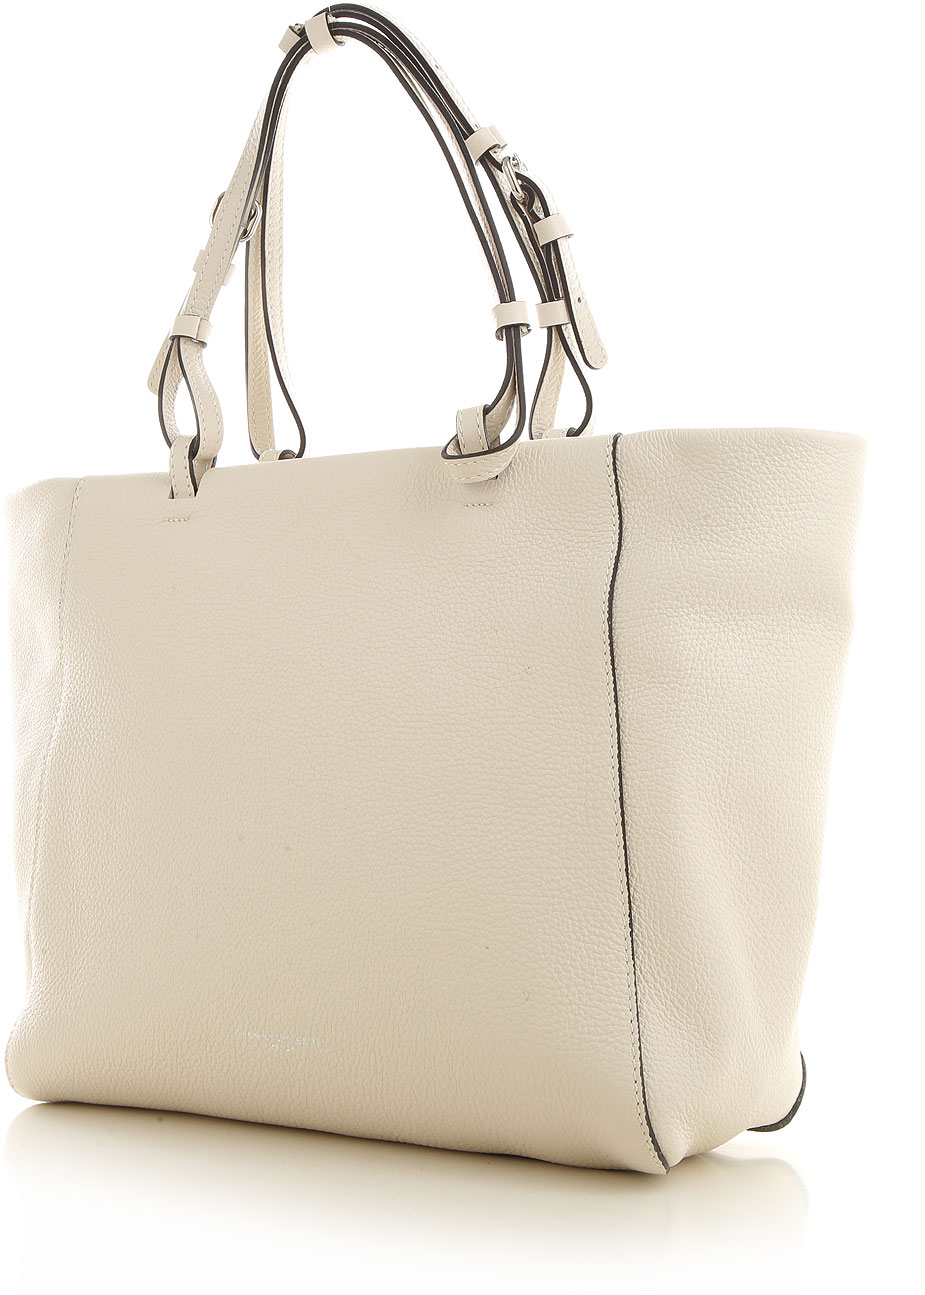 Handbags Gianni Chiarini, Style code: 8496-grn-bianco